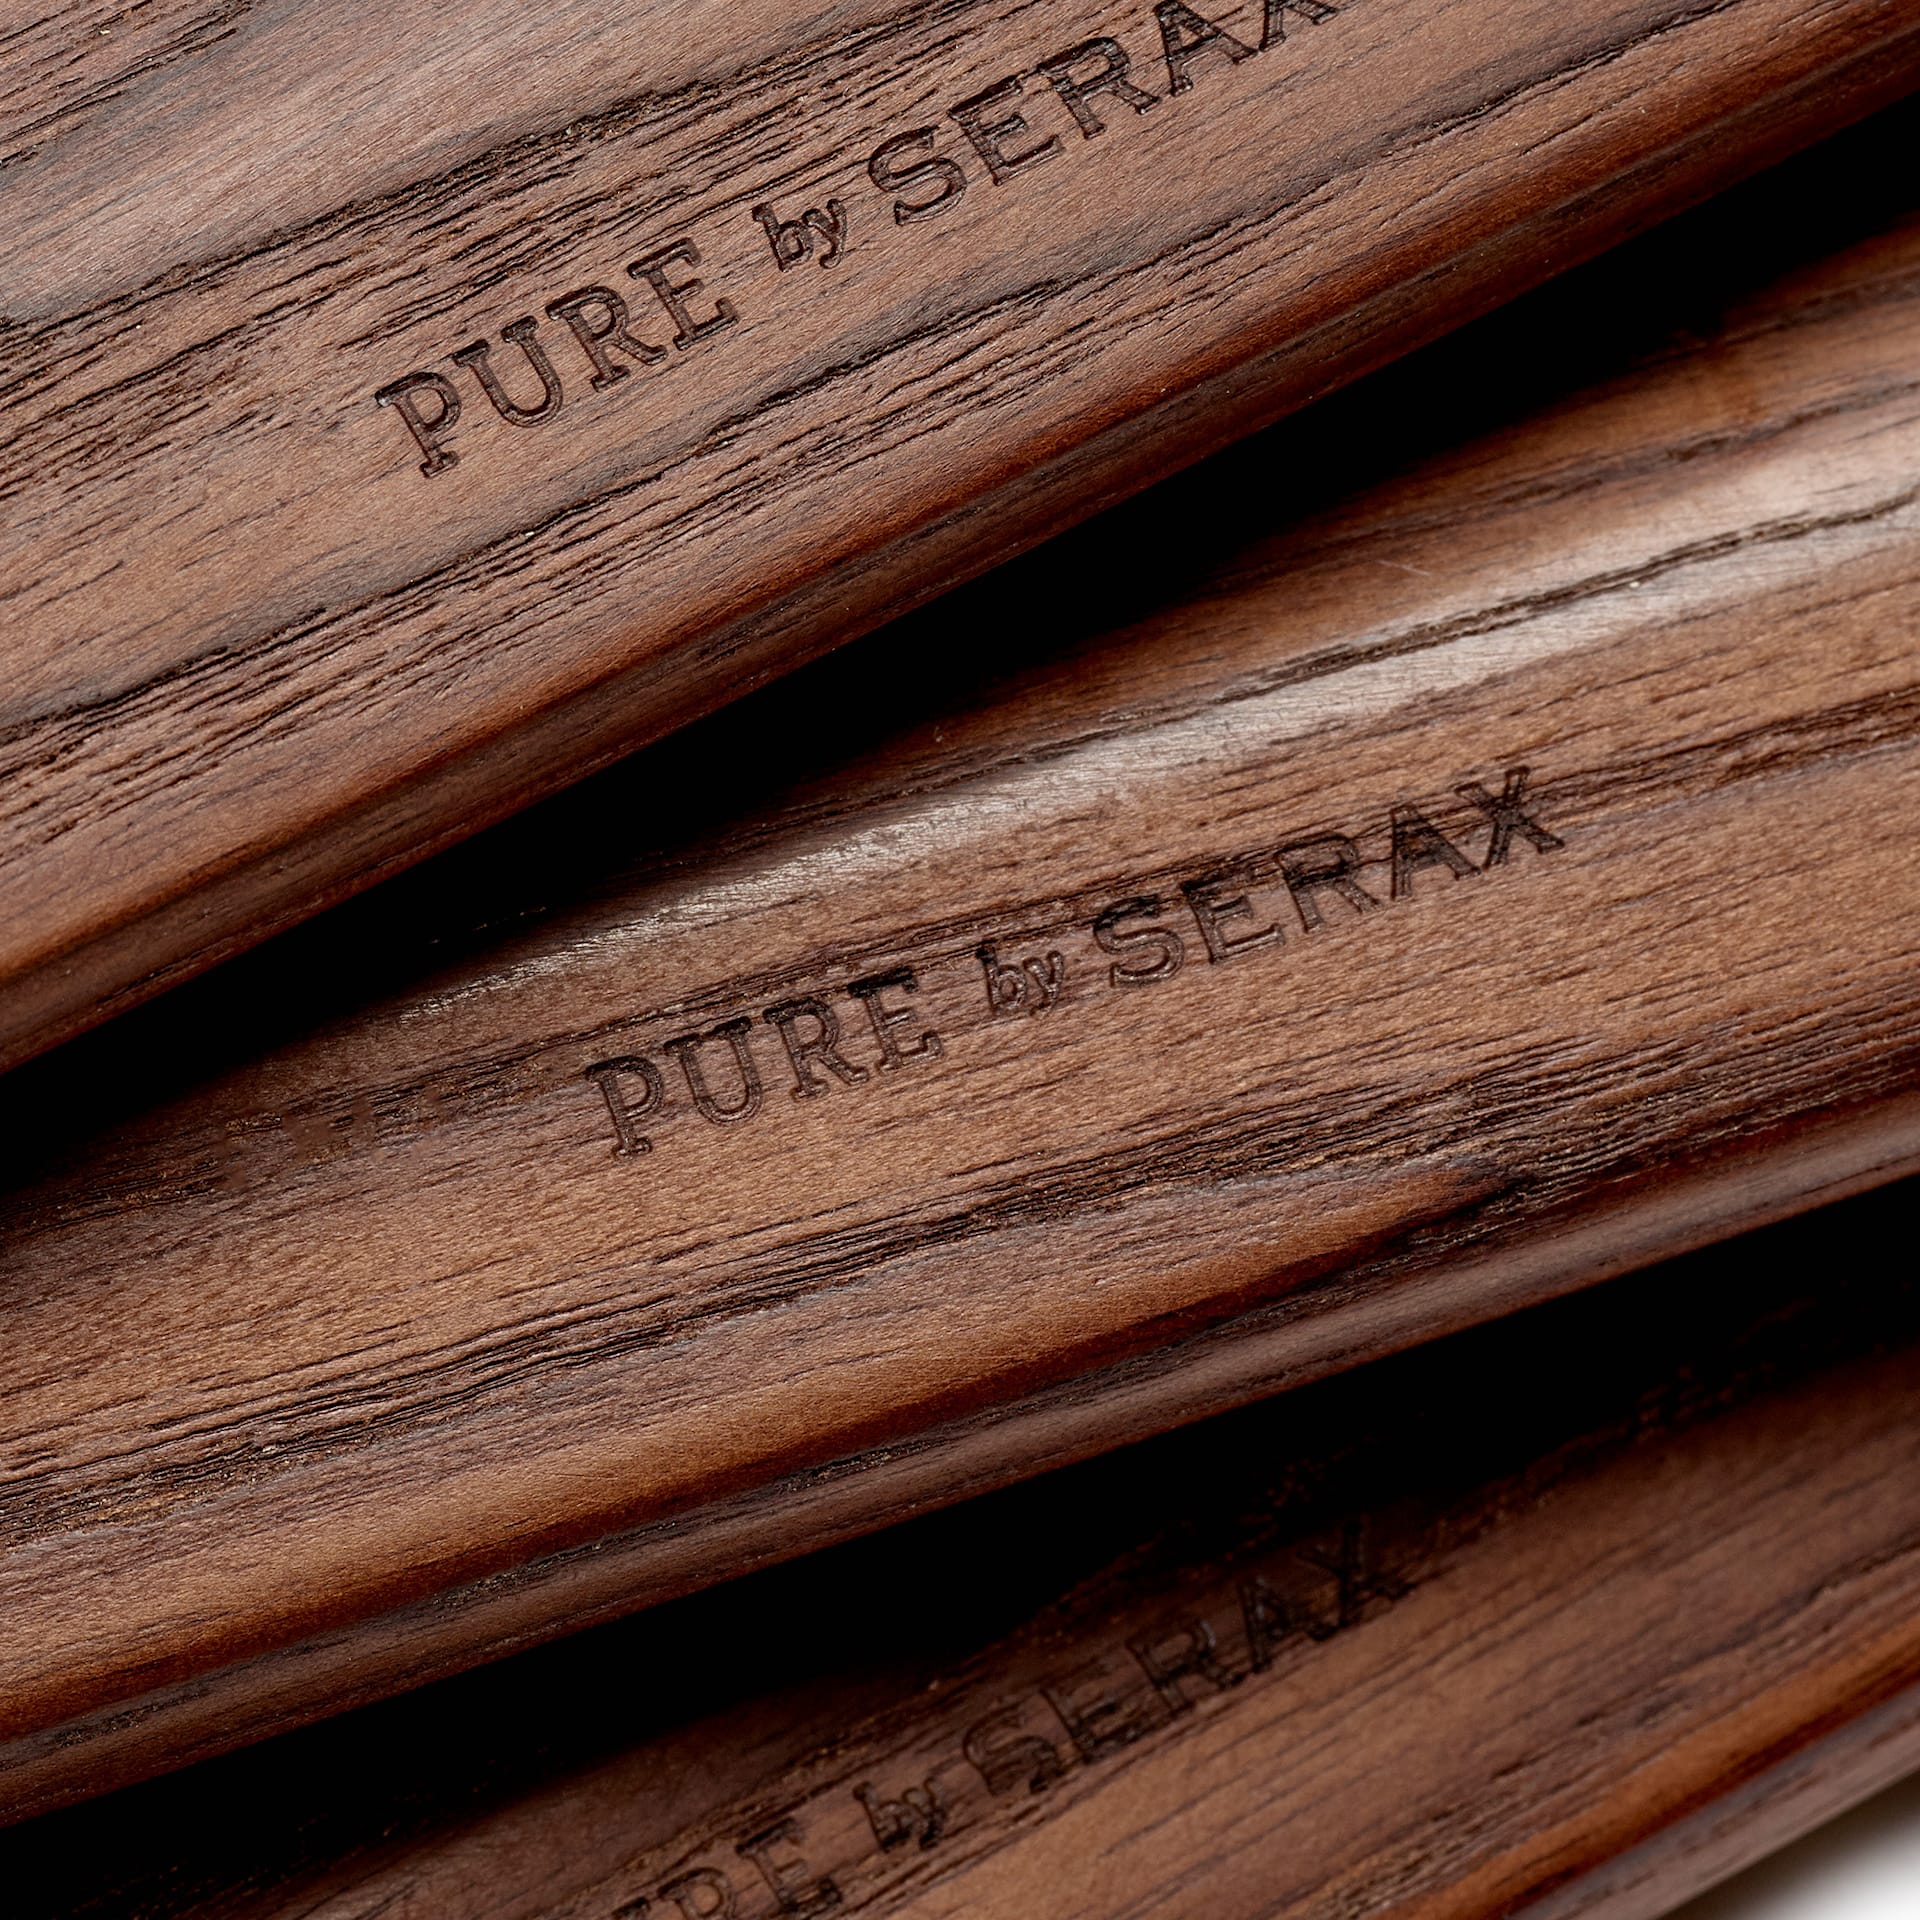 Kitchen Tools Set Of 5 Pure Wood - Serax - NO GA